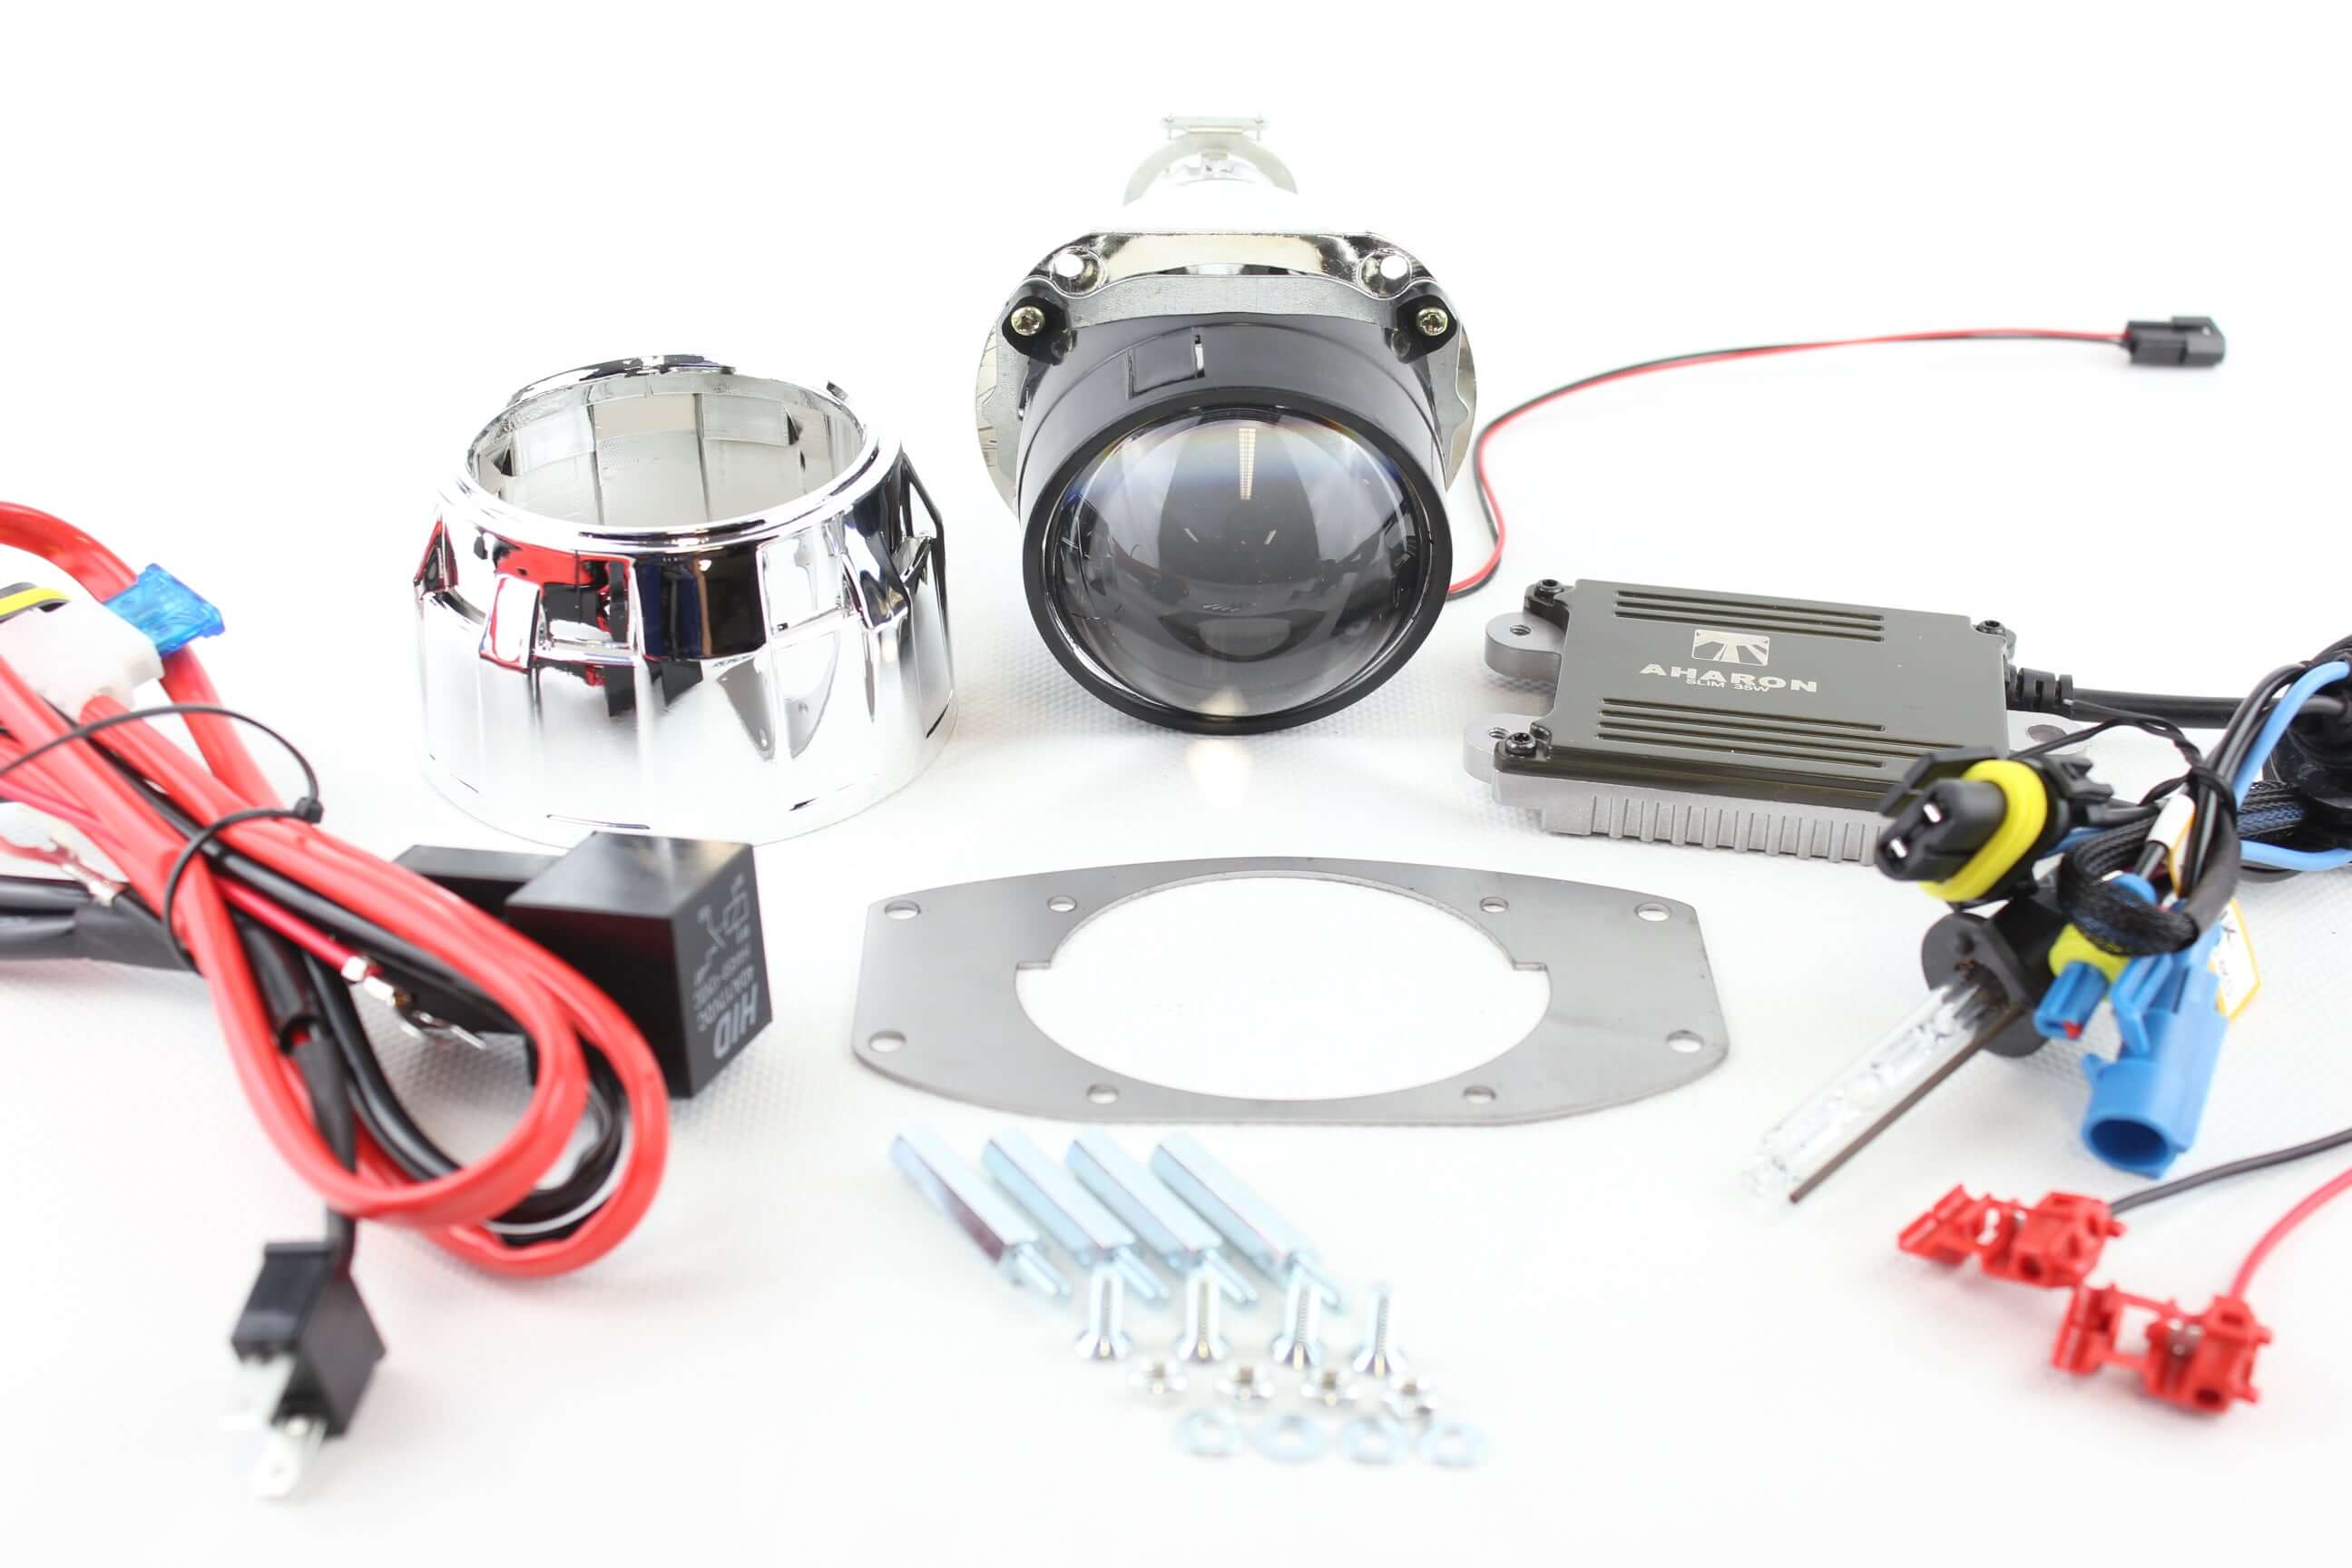 Suzuki GSX-R750 HID bi-xenon headlight upgrade kit